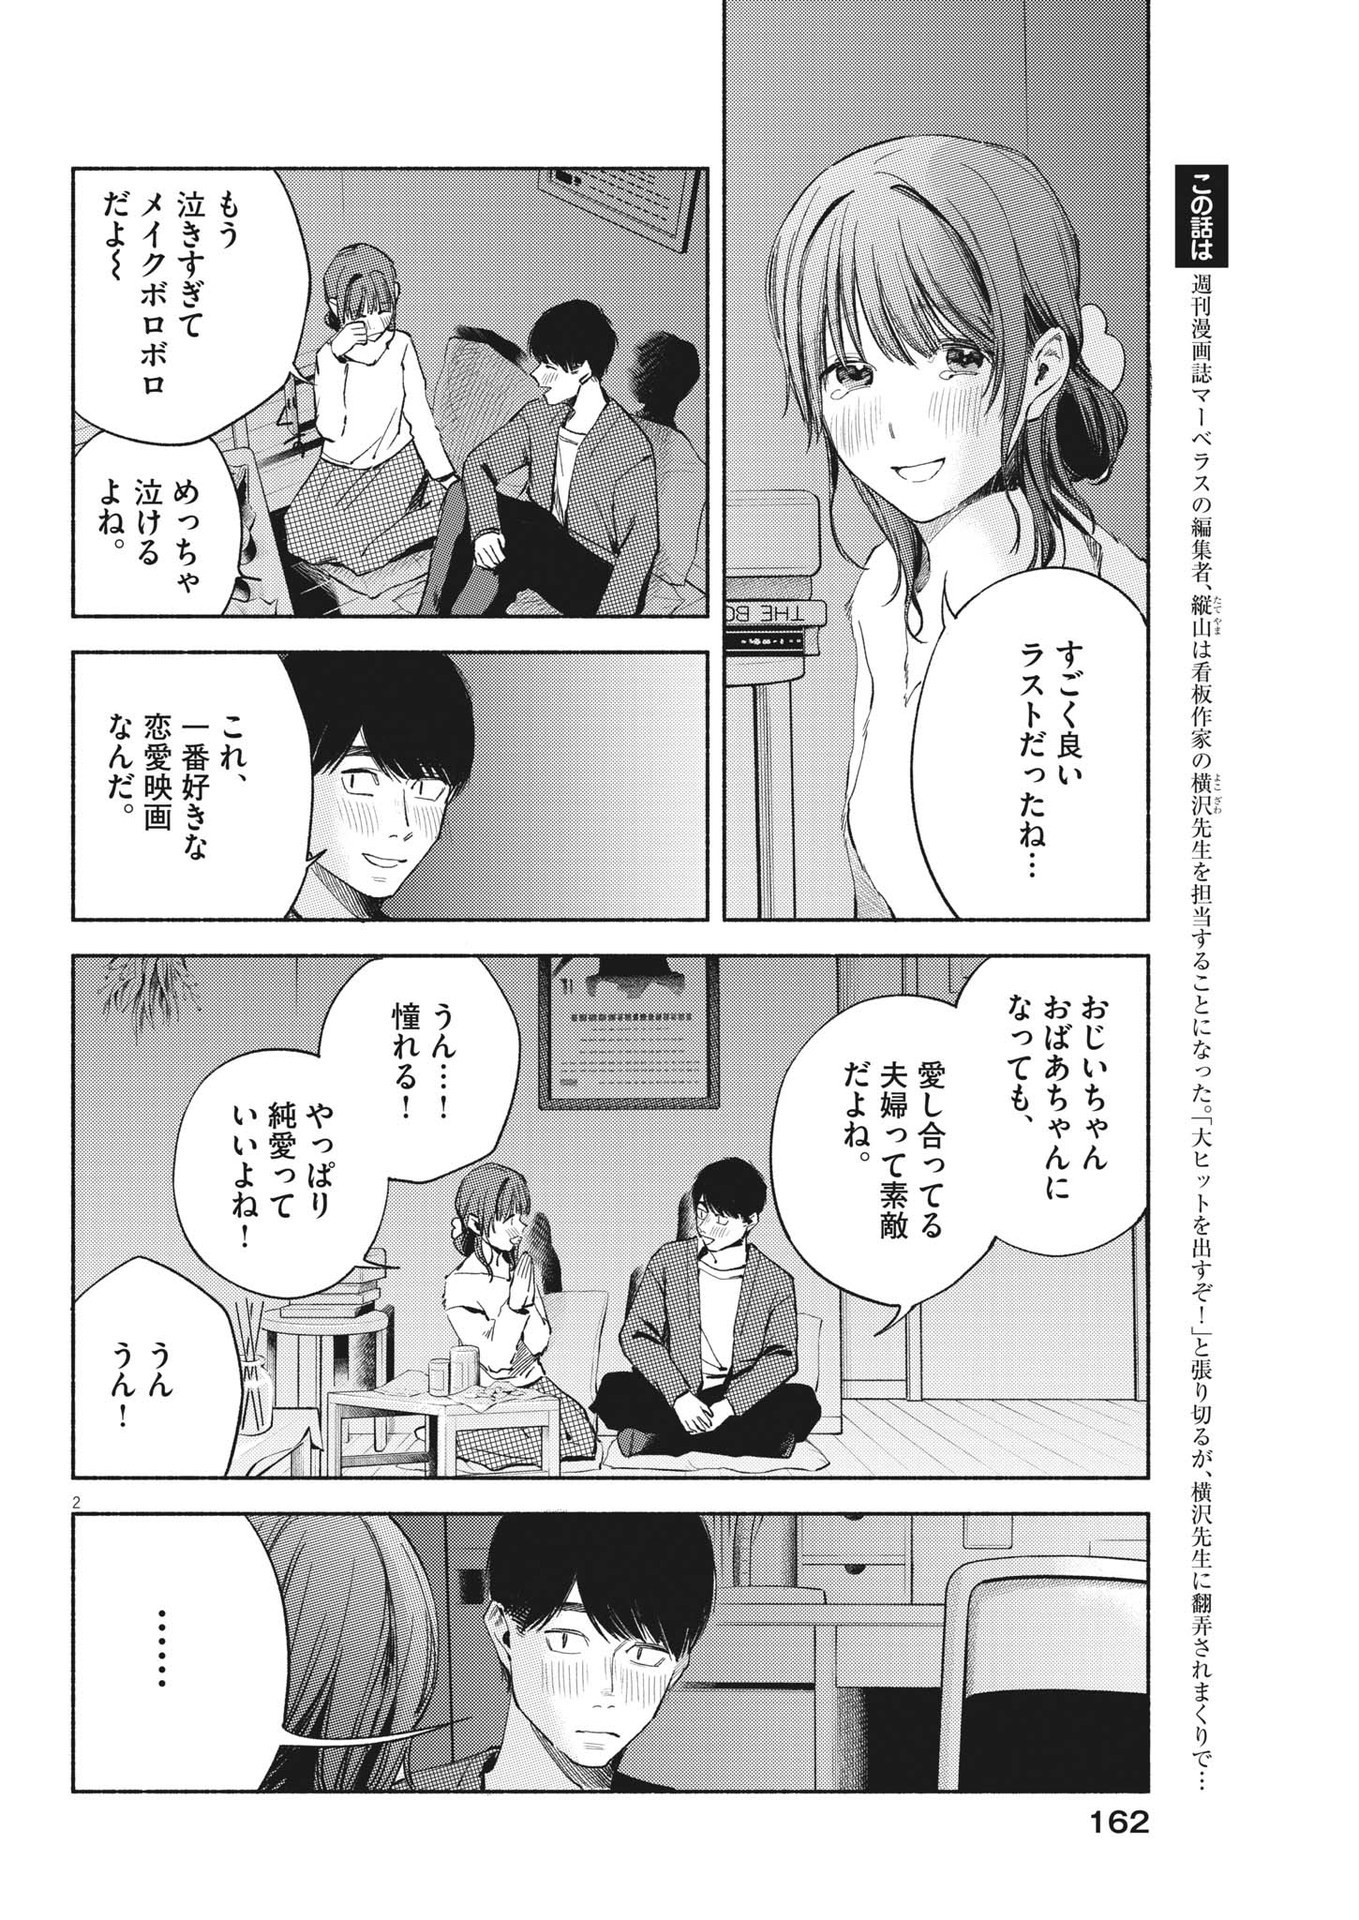 Henshuu no Isshou - Chapter 15 - Page 2